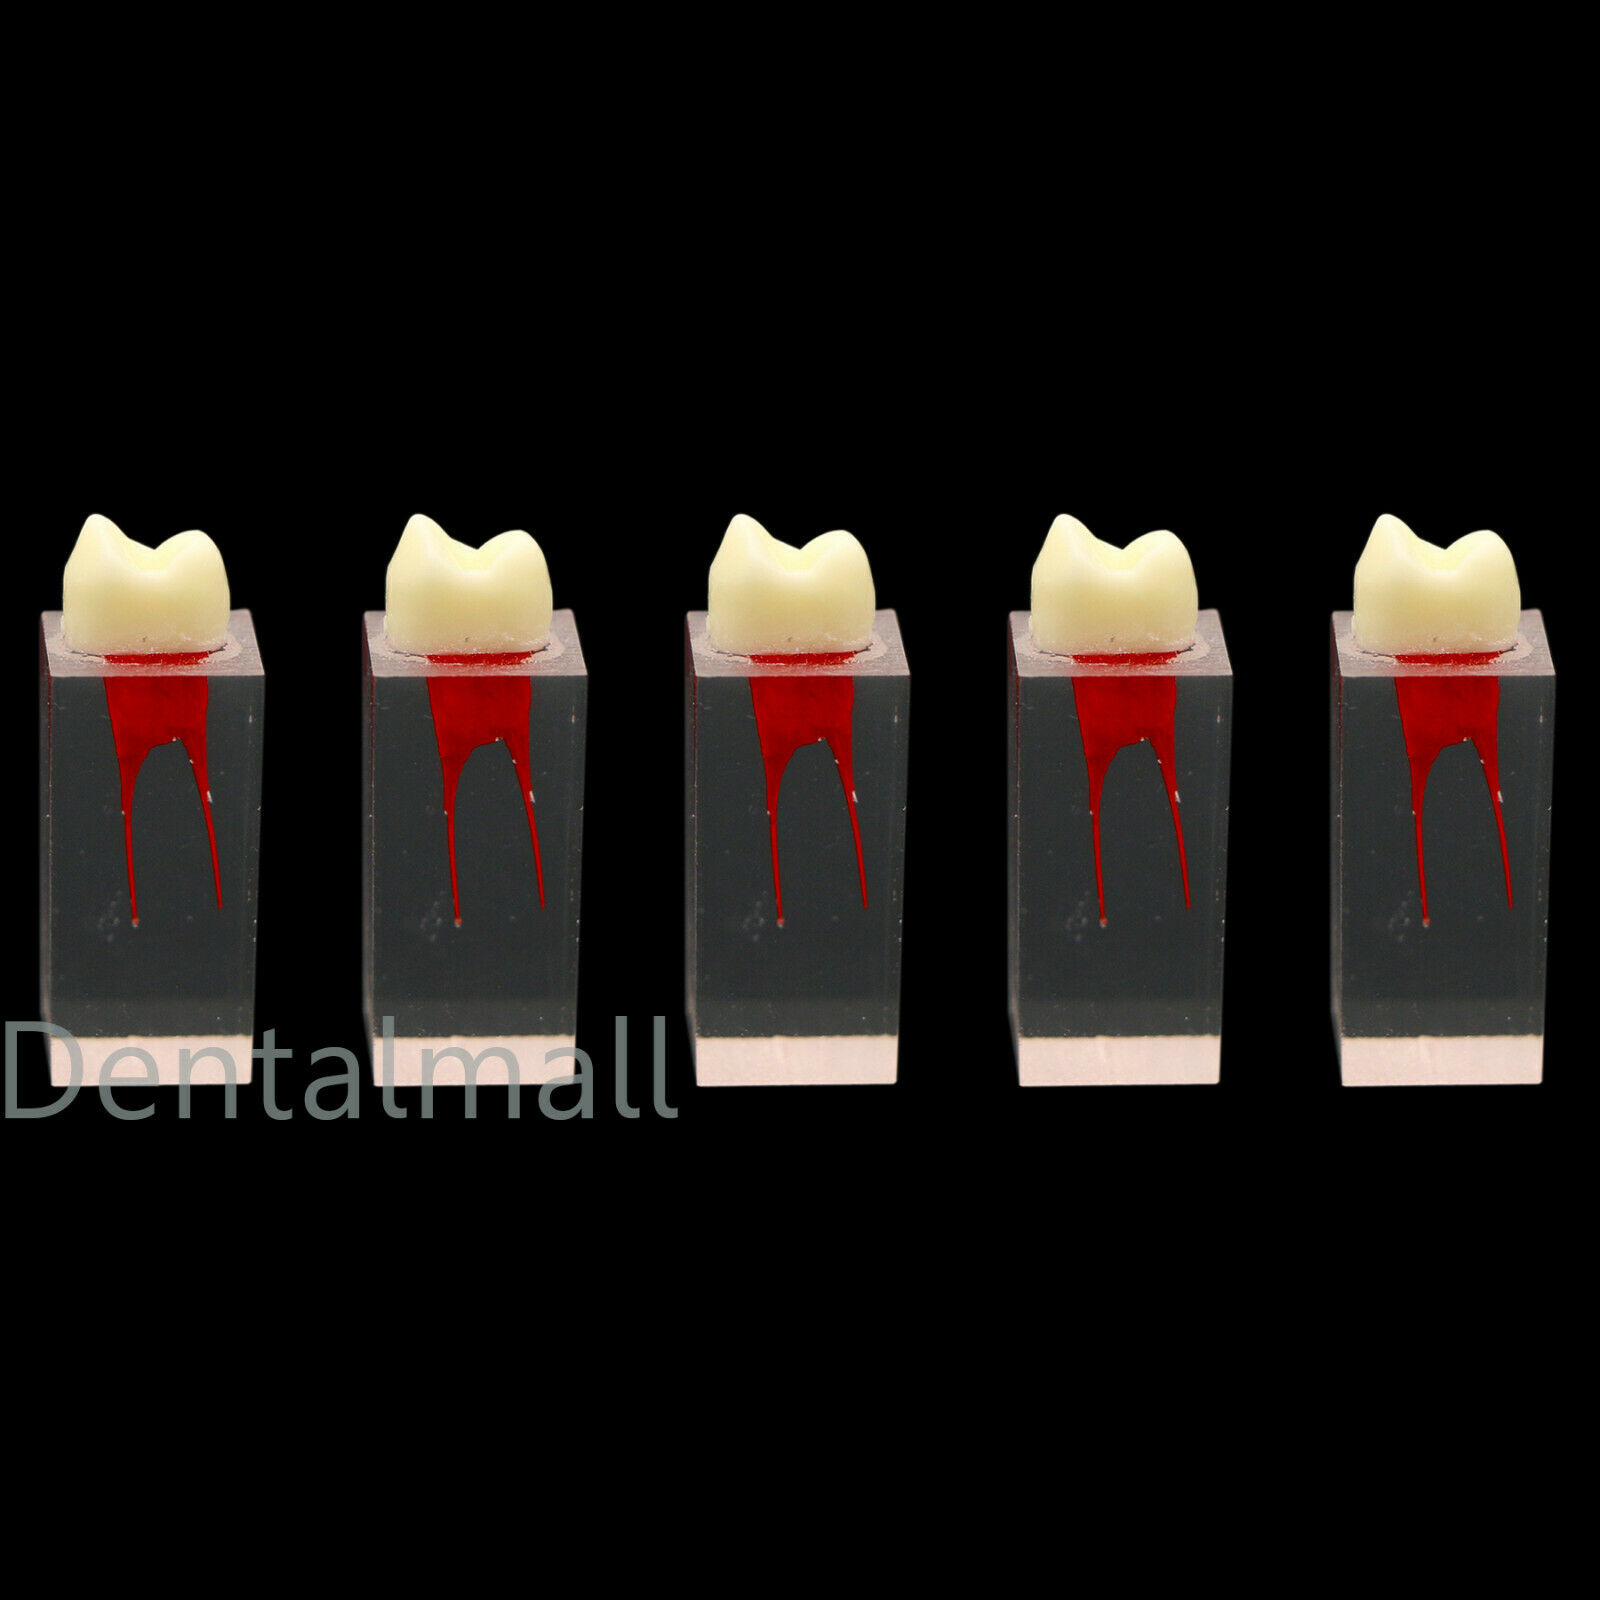 Dental Root Teeth Teeth Molar Model Practice Practice pour le fichier de pâte endodontique